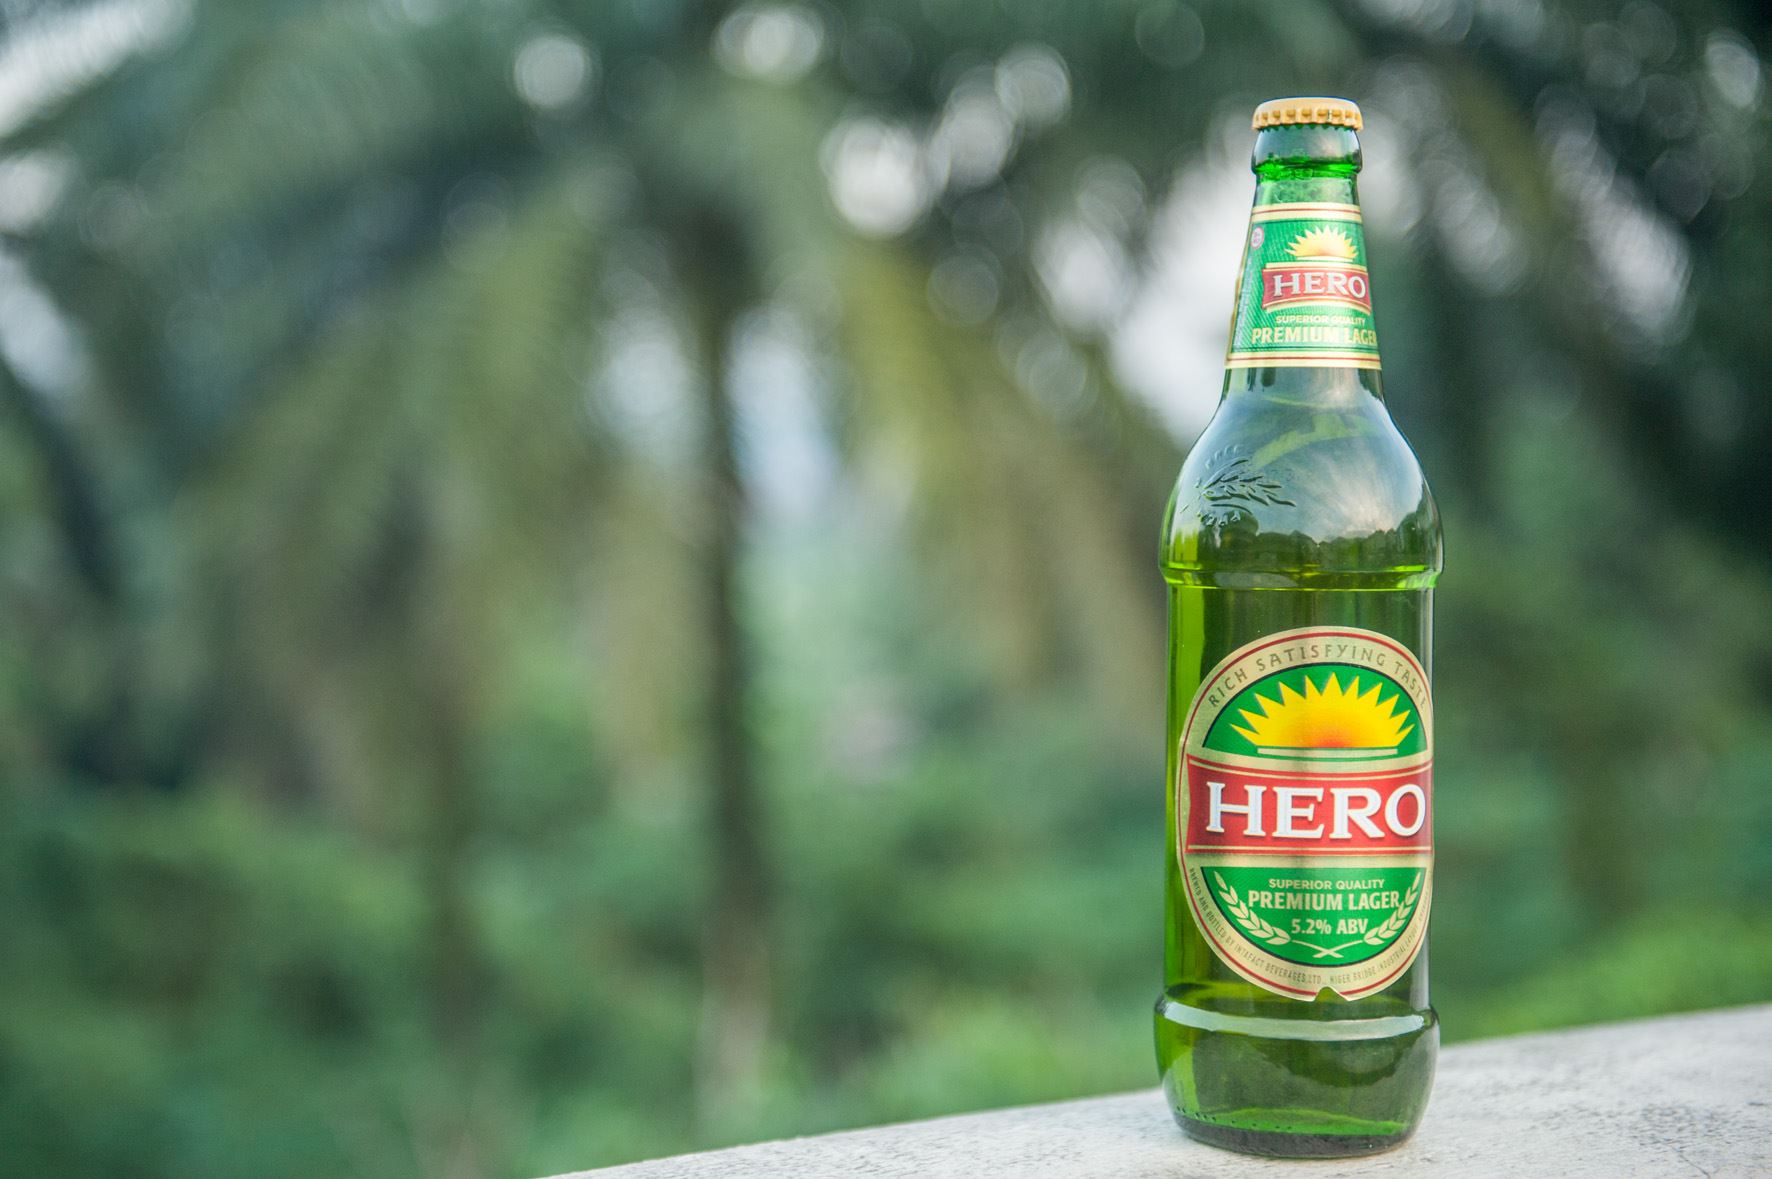 Hero-Lager beer from AB-InBev